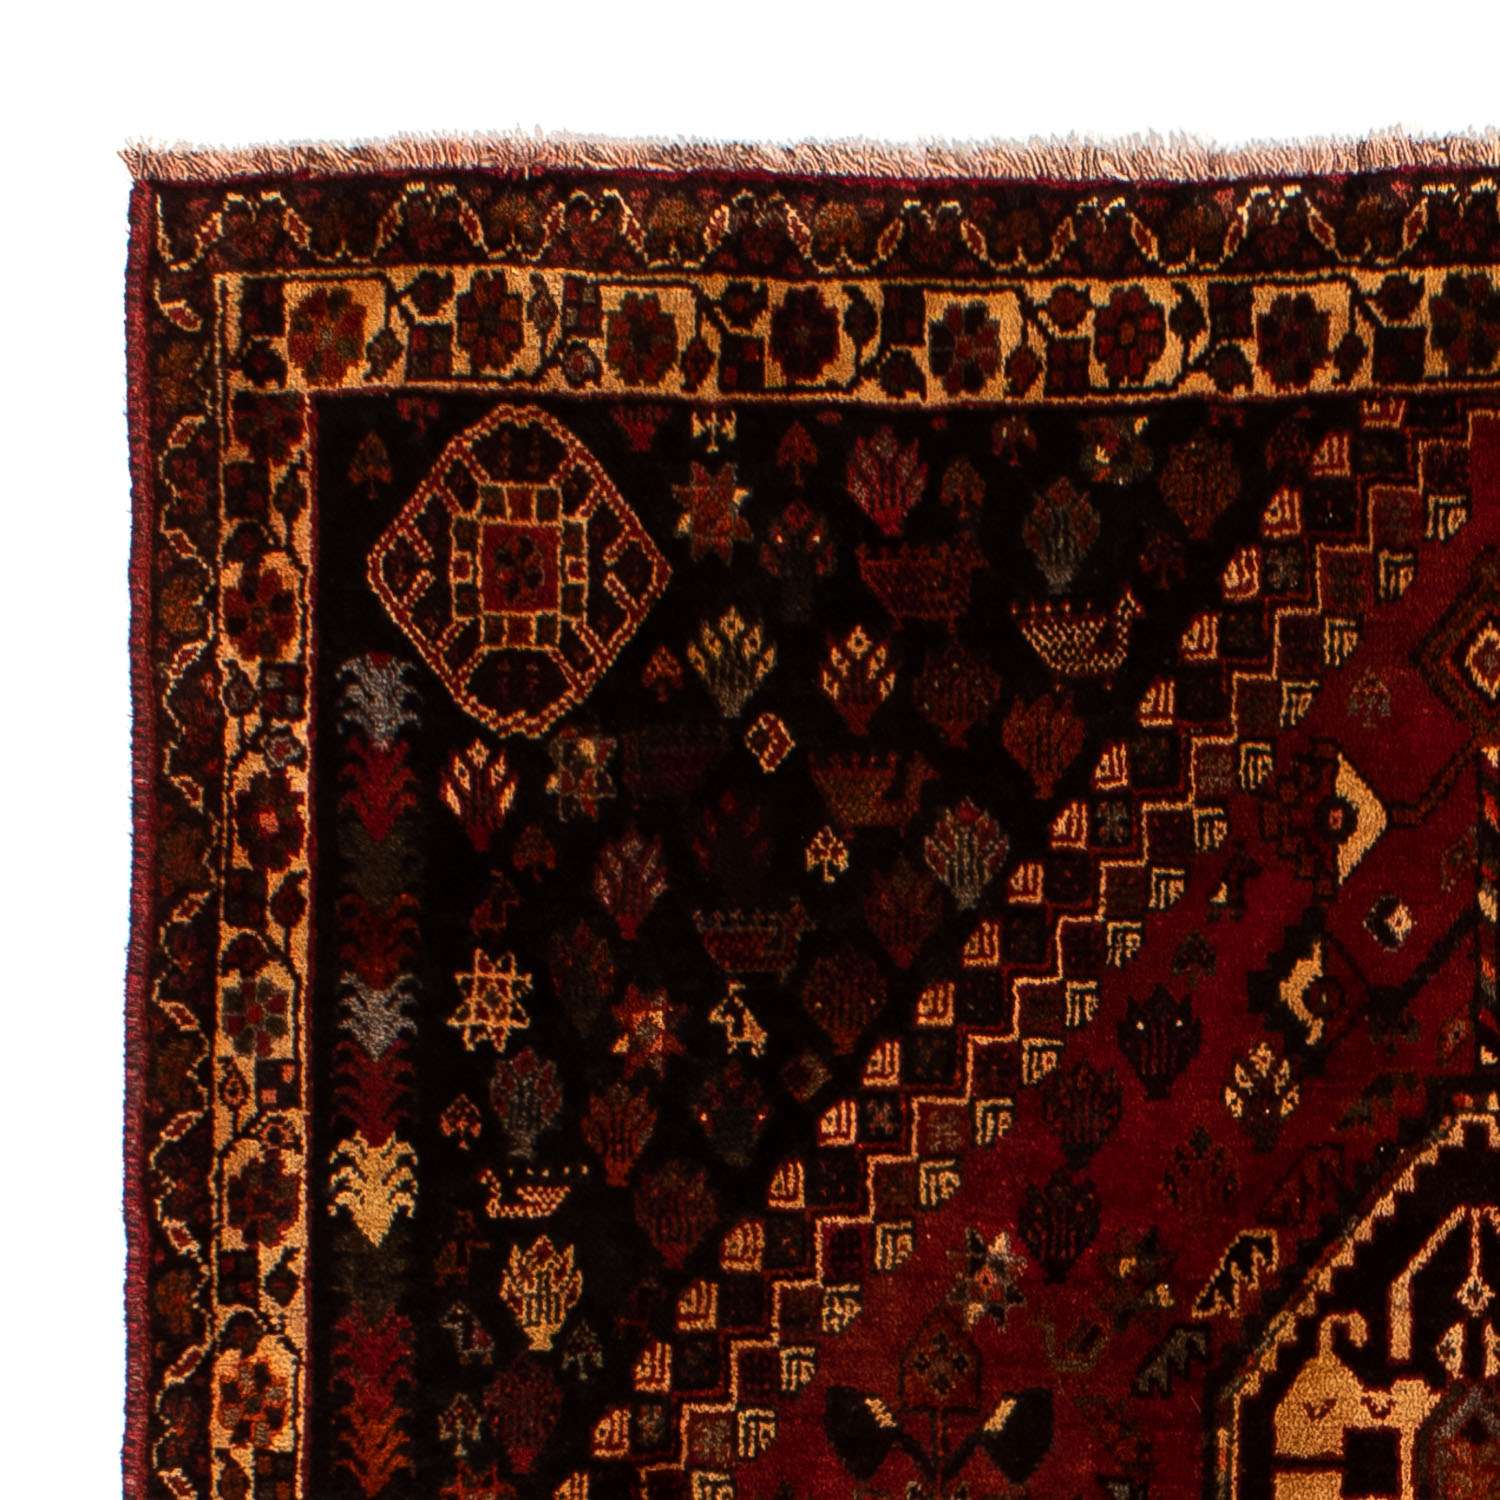 Persisk matta - Nomadic - 250 x 185 cm - mörkröd